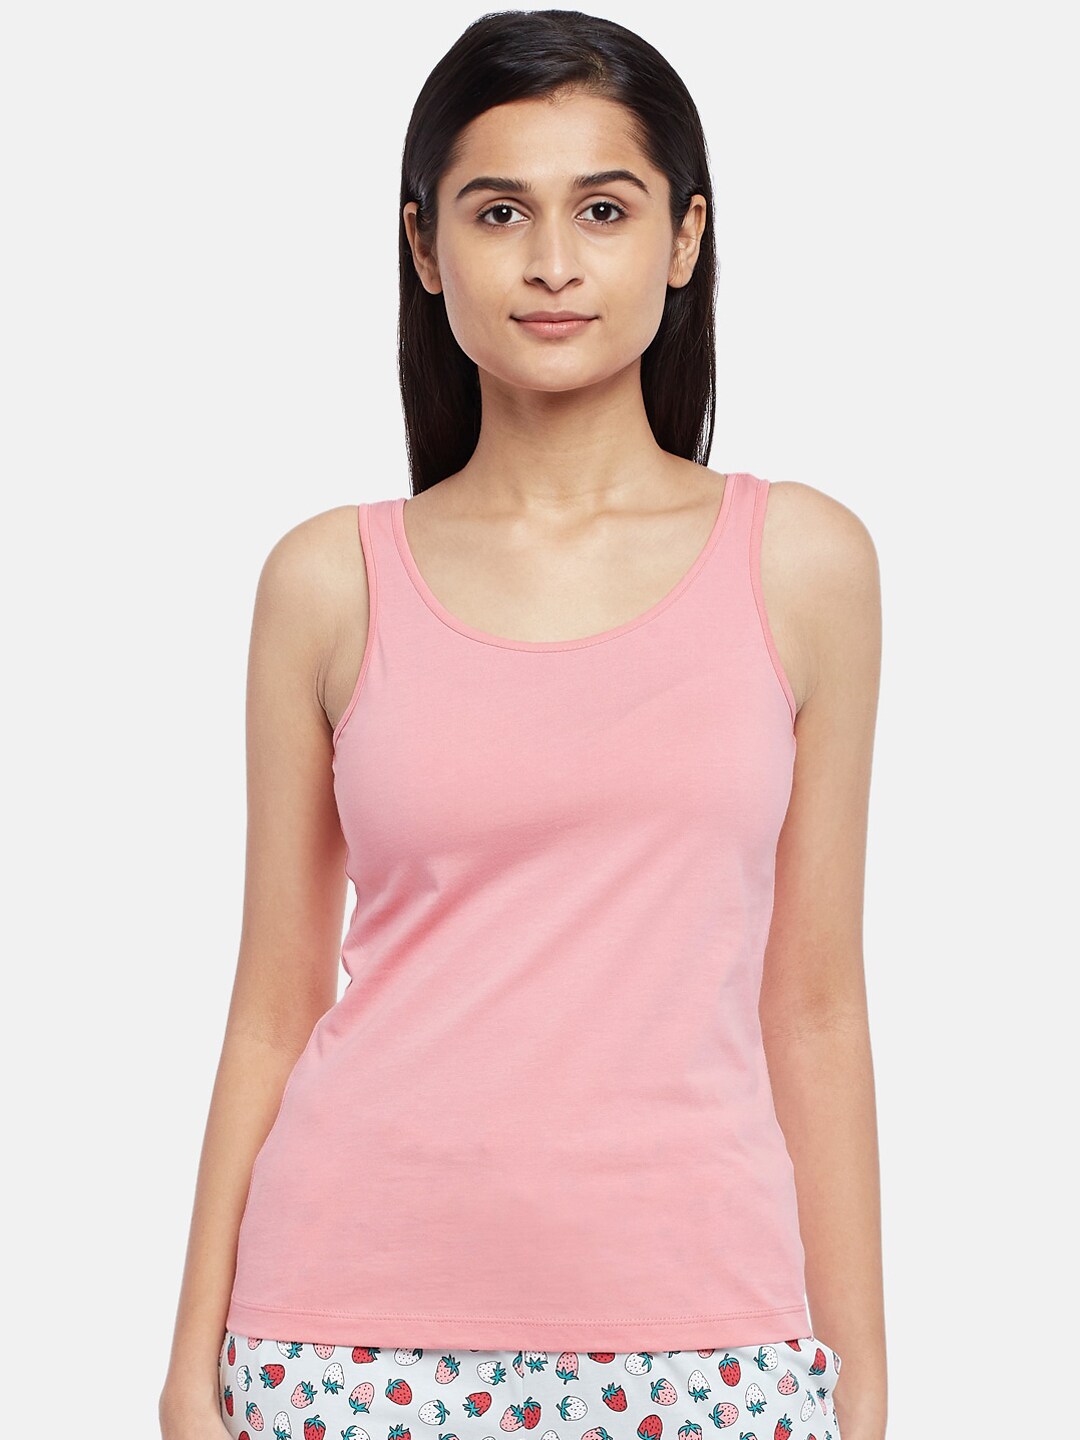 Dreamz by Pantaloons Women Pink Tank Lounge T-shirt Price in India